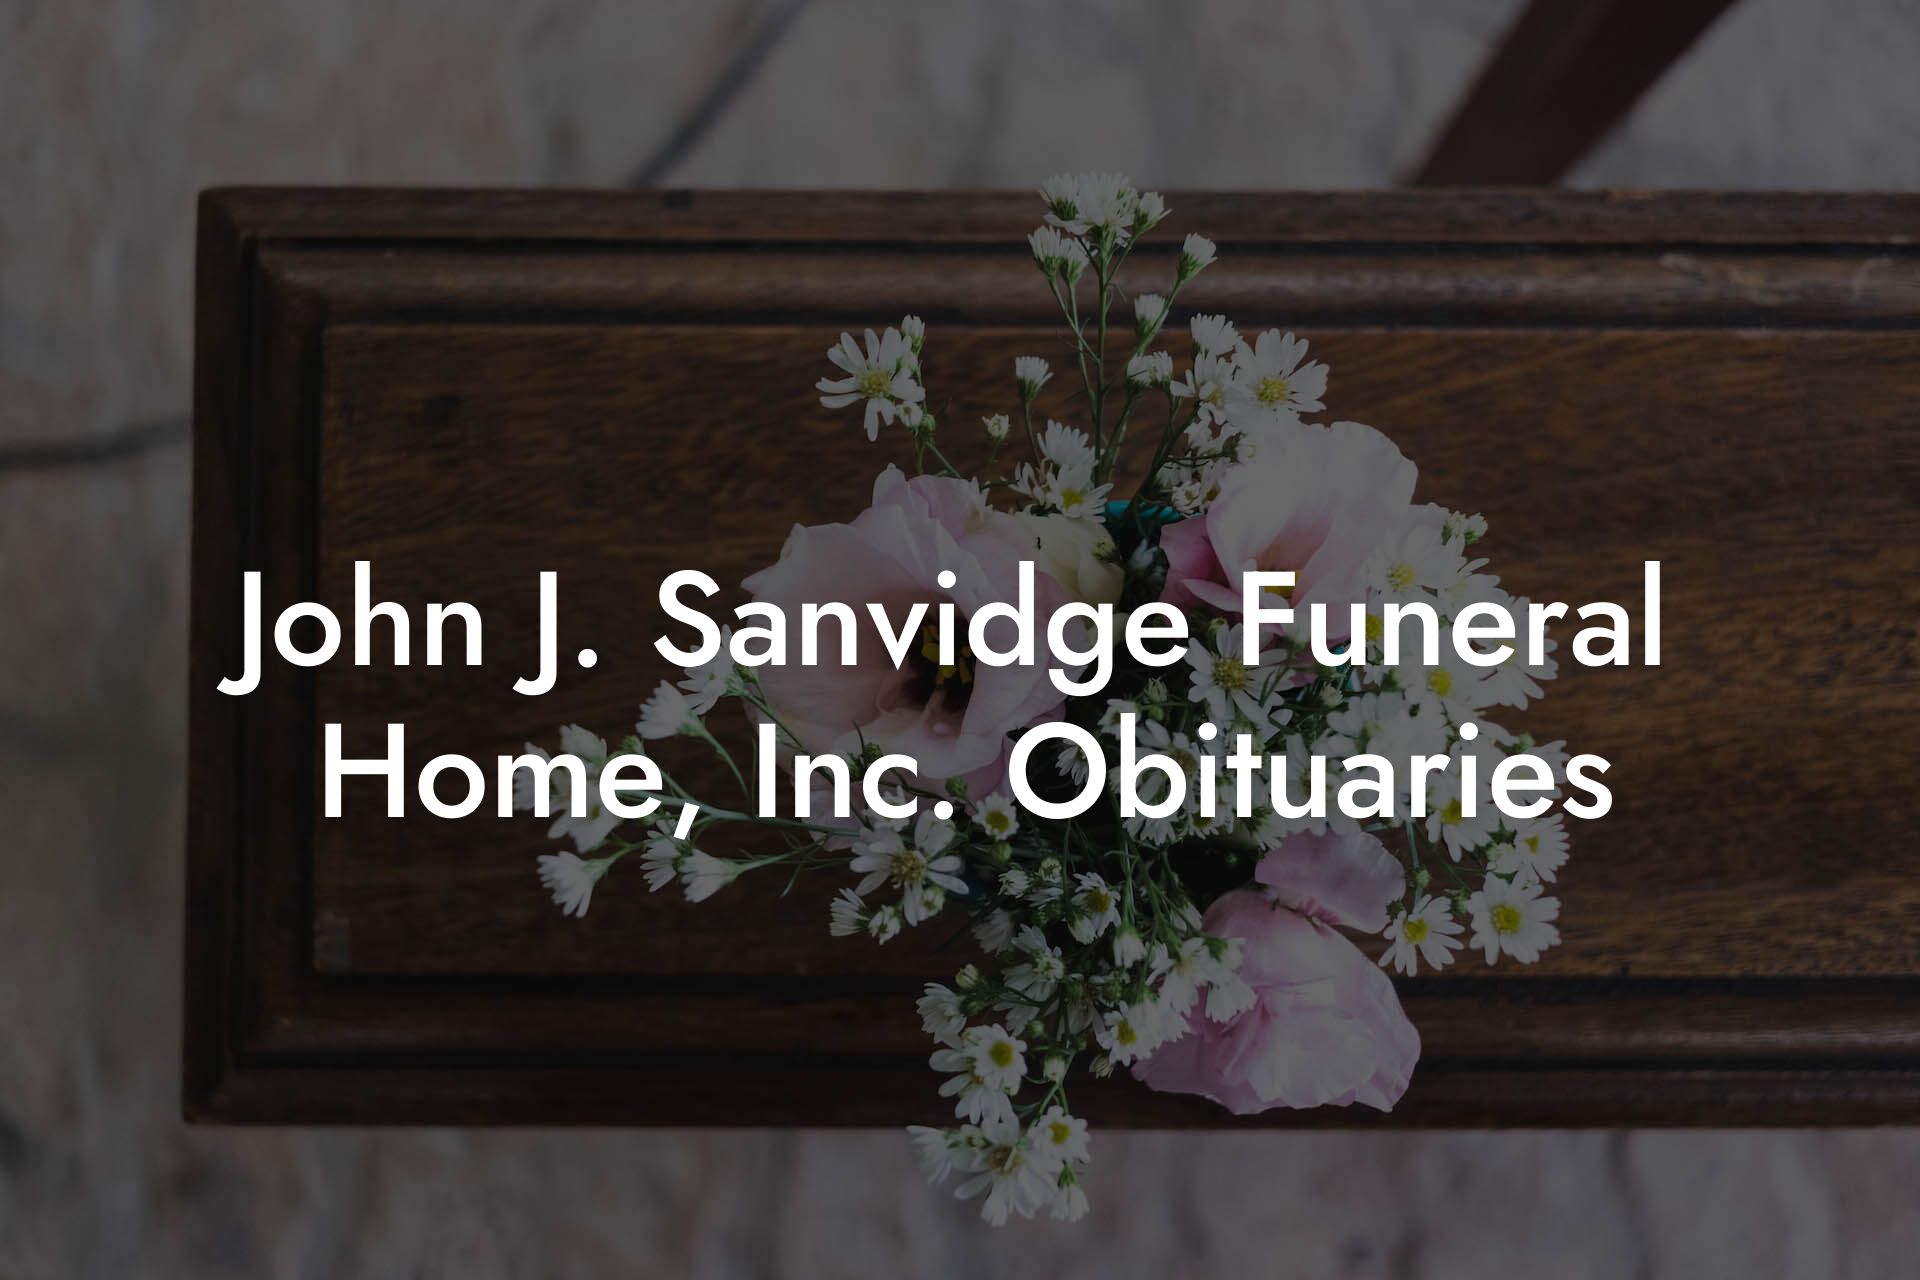 John J. Sanvidge Funeral Home, Inc. Obituaries